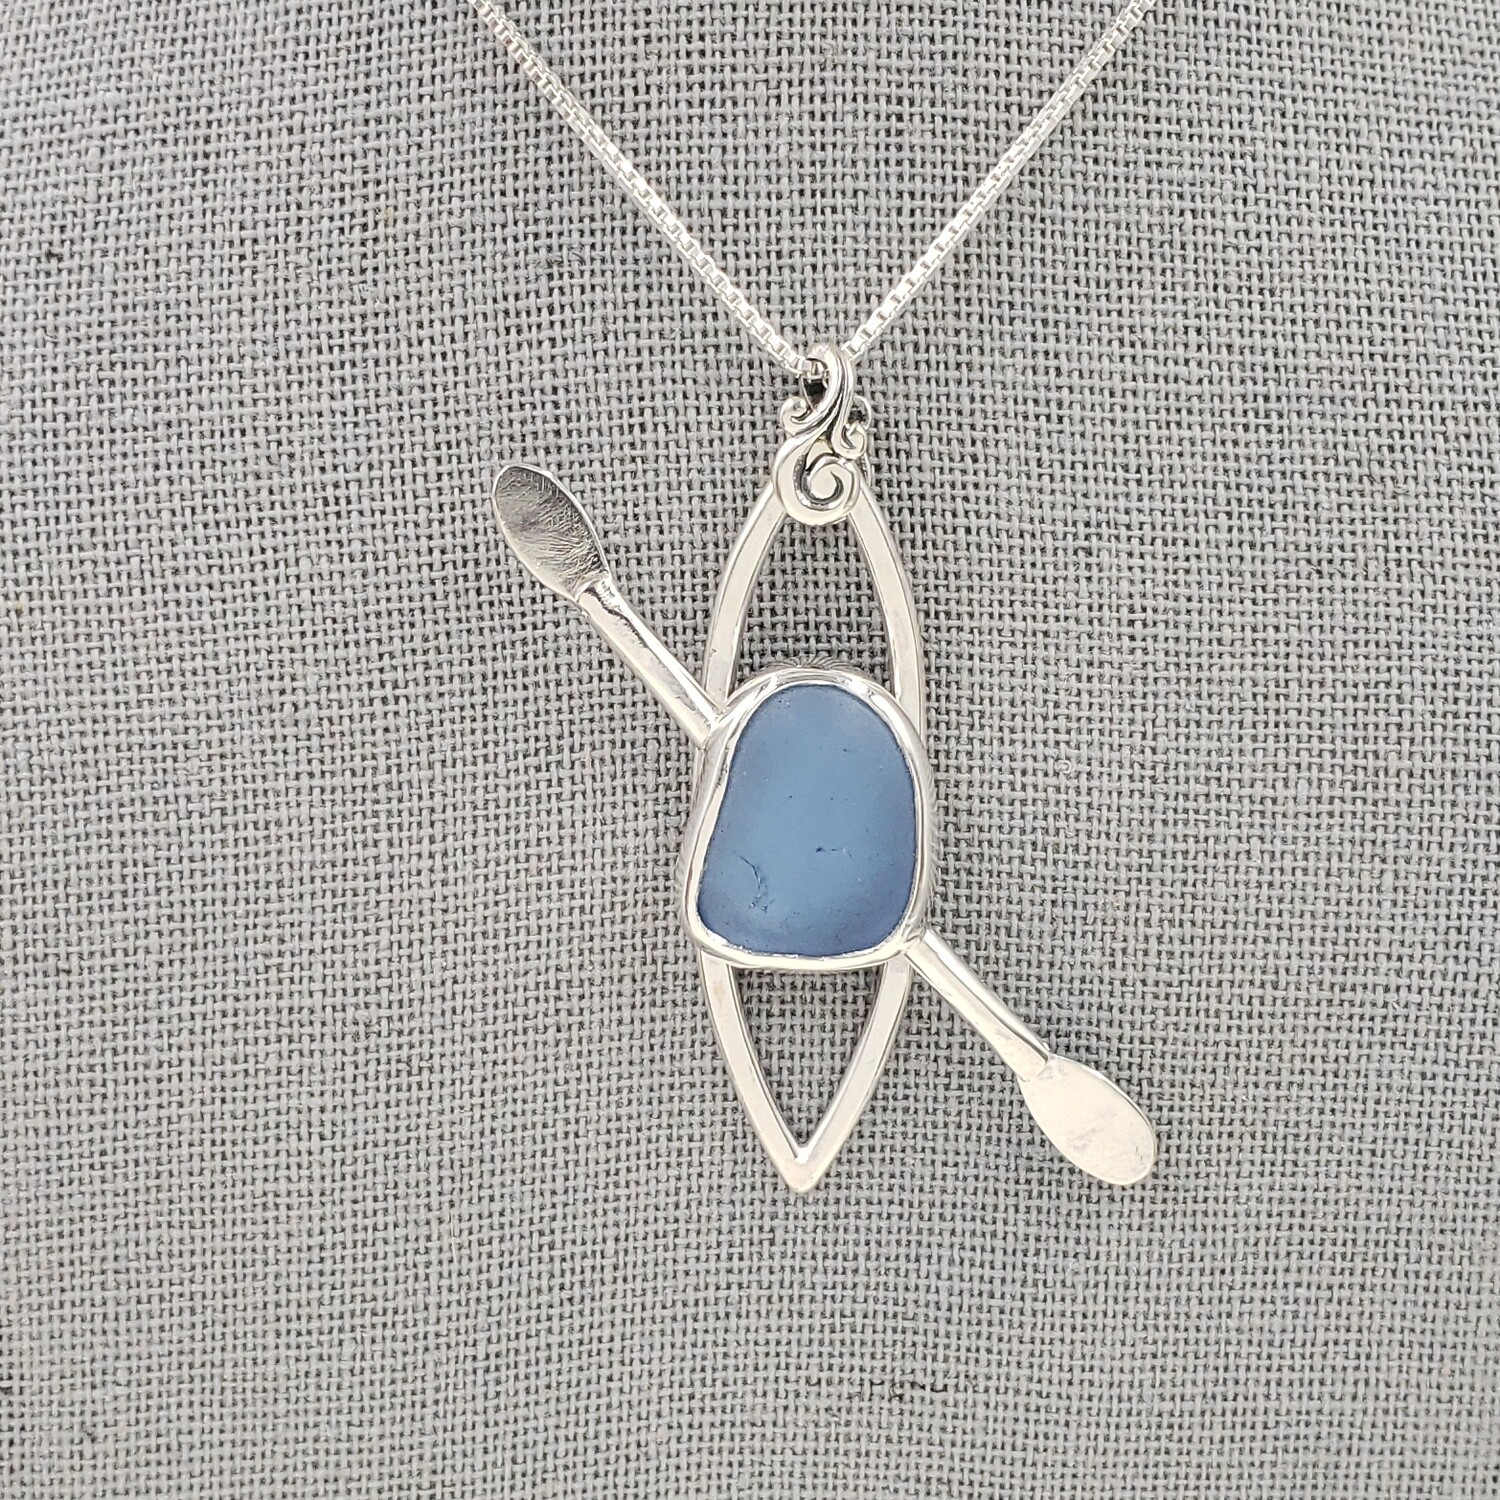 Cornflower Blue Lake Erie Beach Glass Kayak Necklace